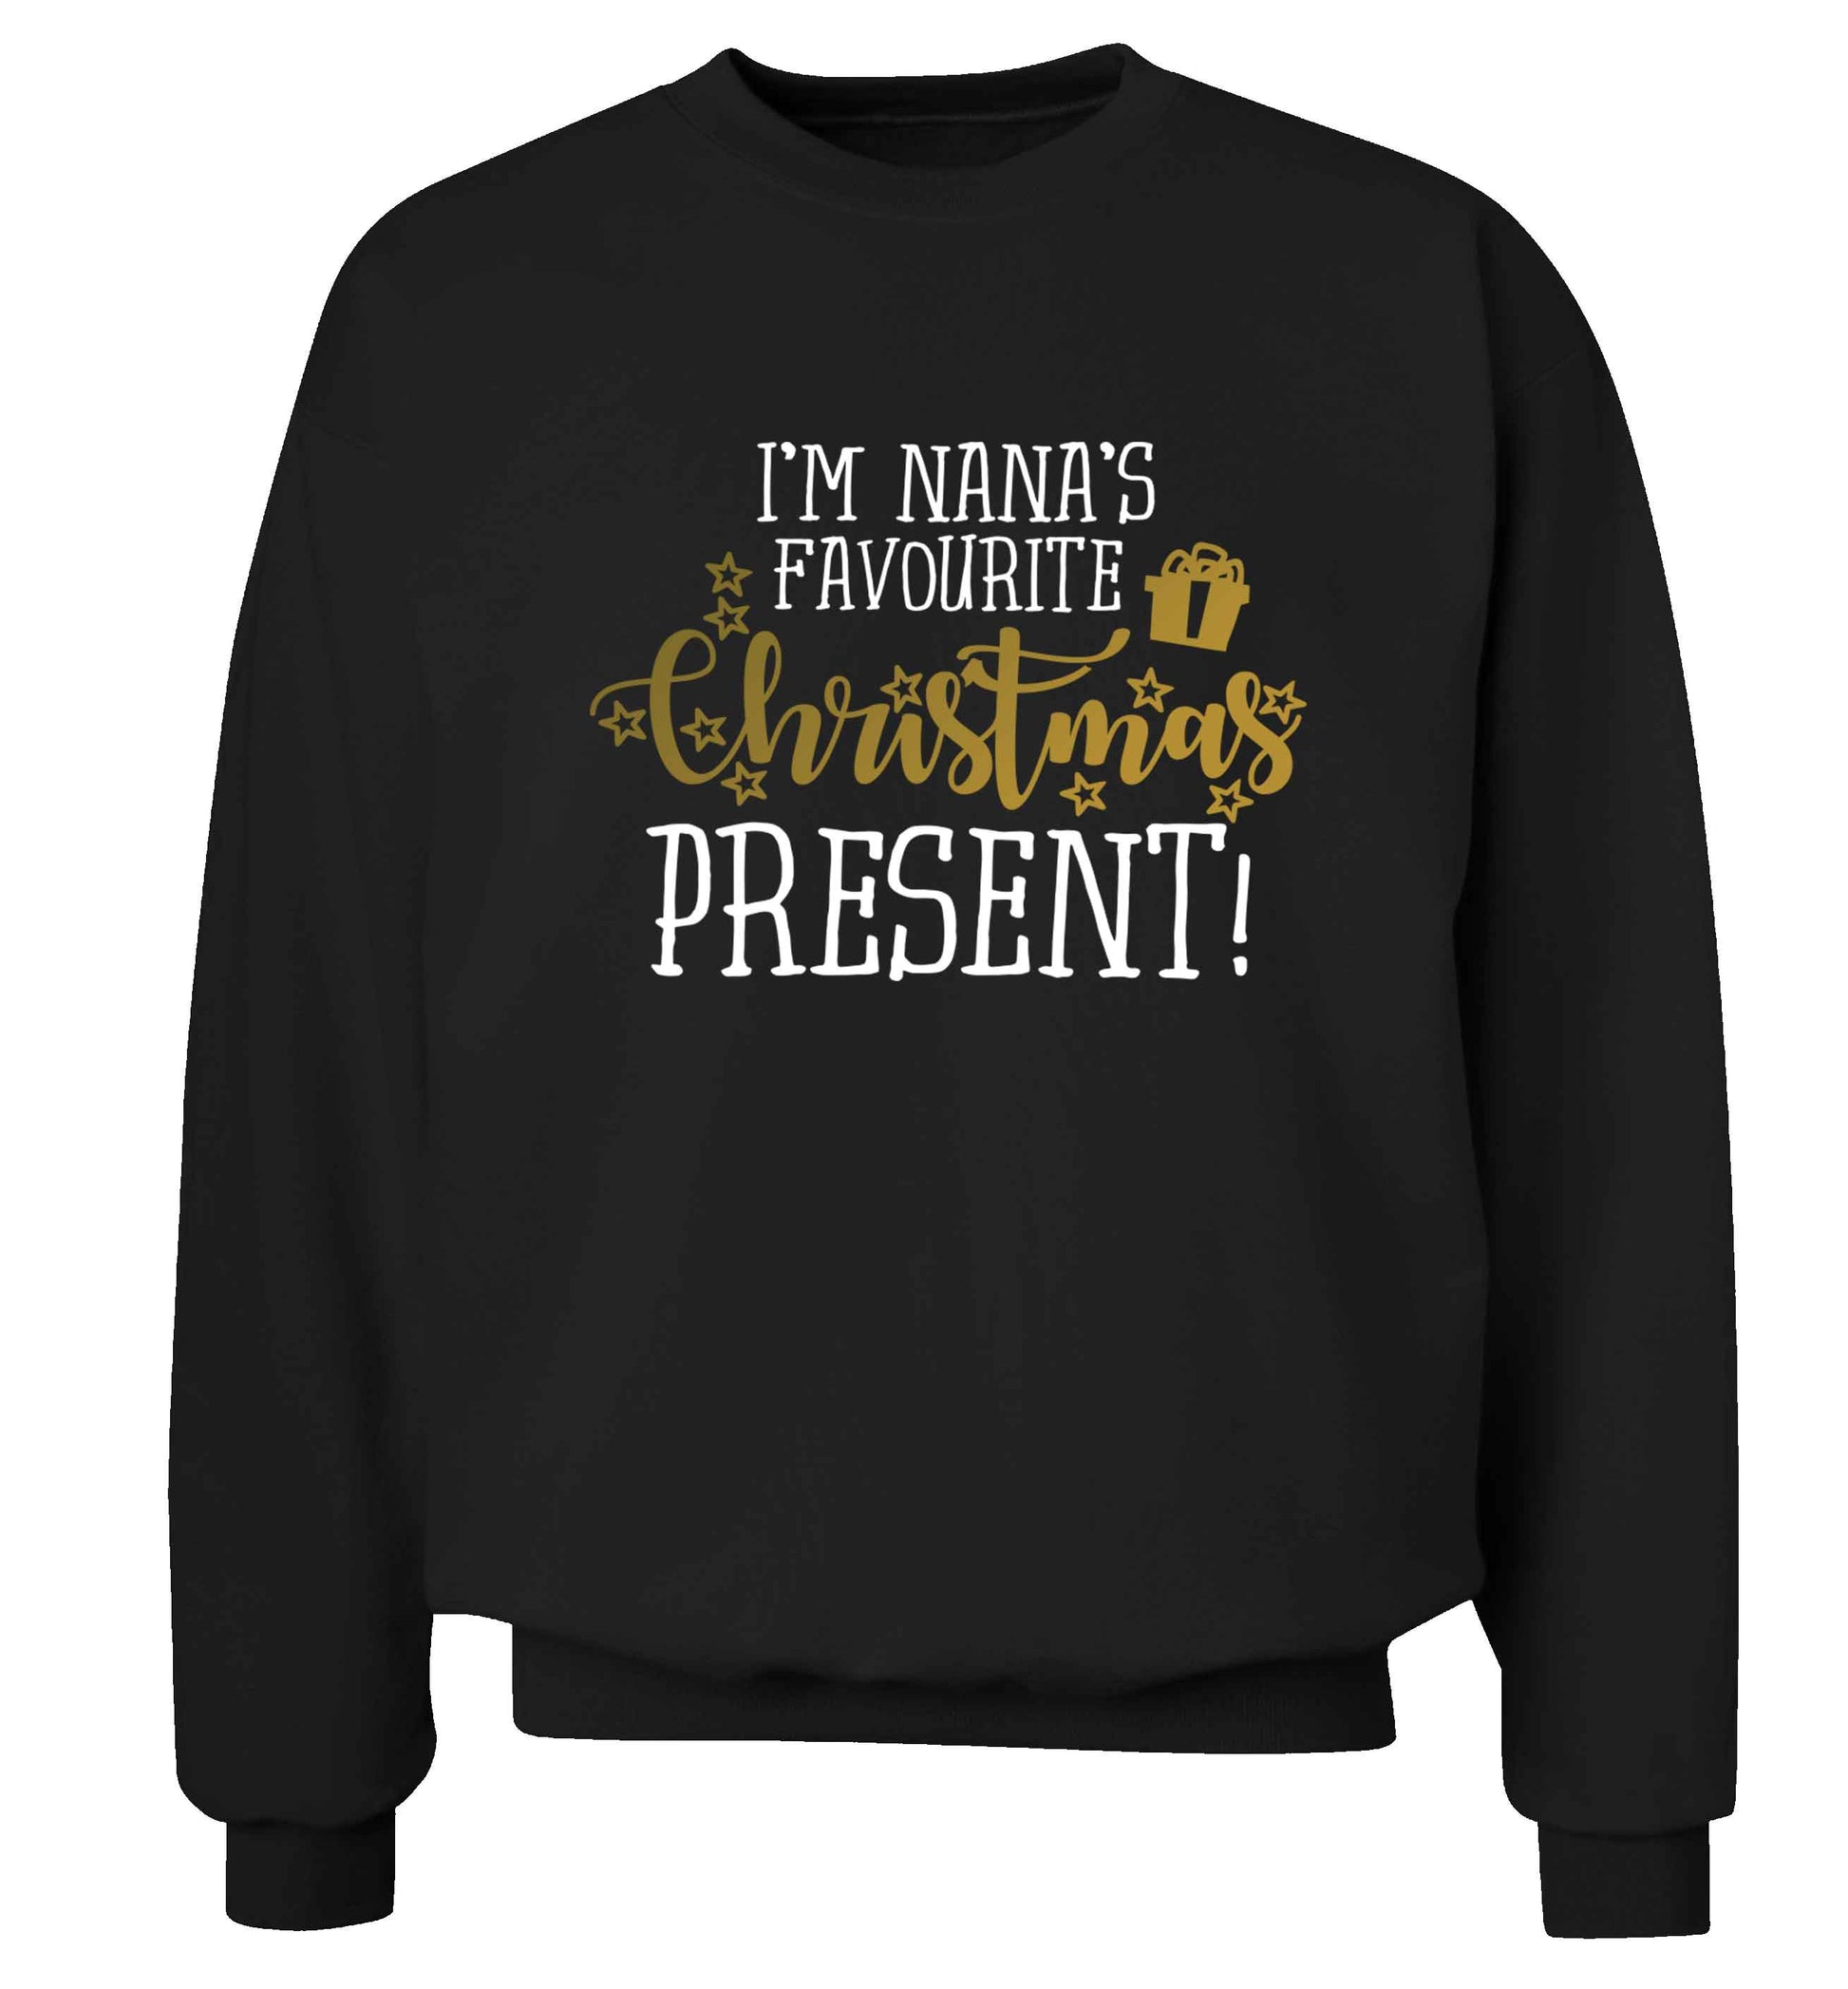 Nana's favourite Christmas present Adult's unisex black Sweater 2XL